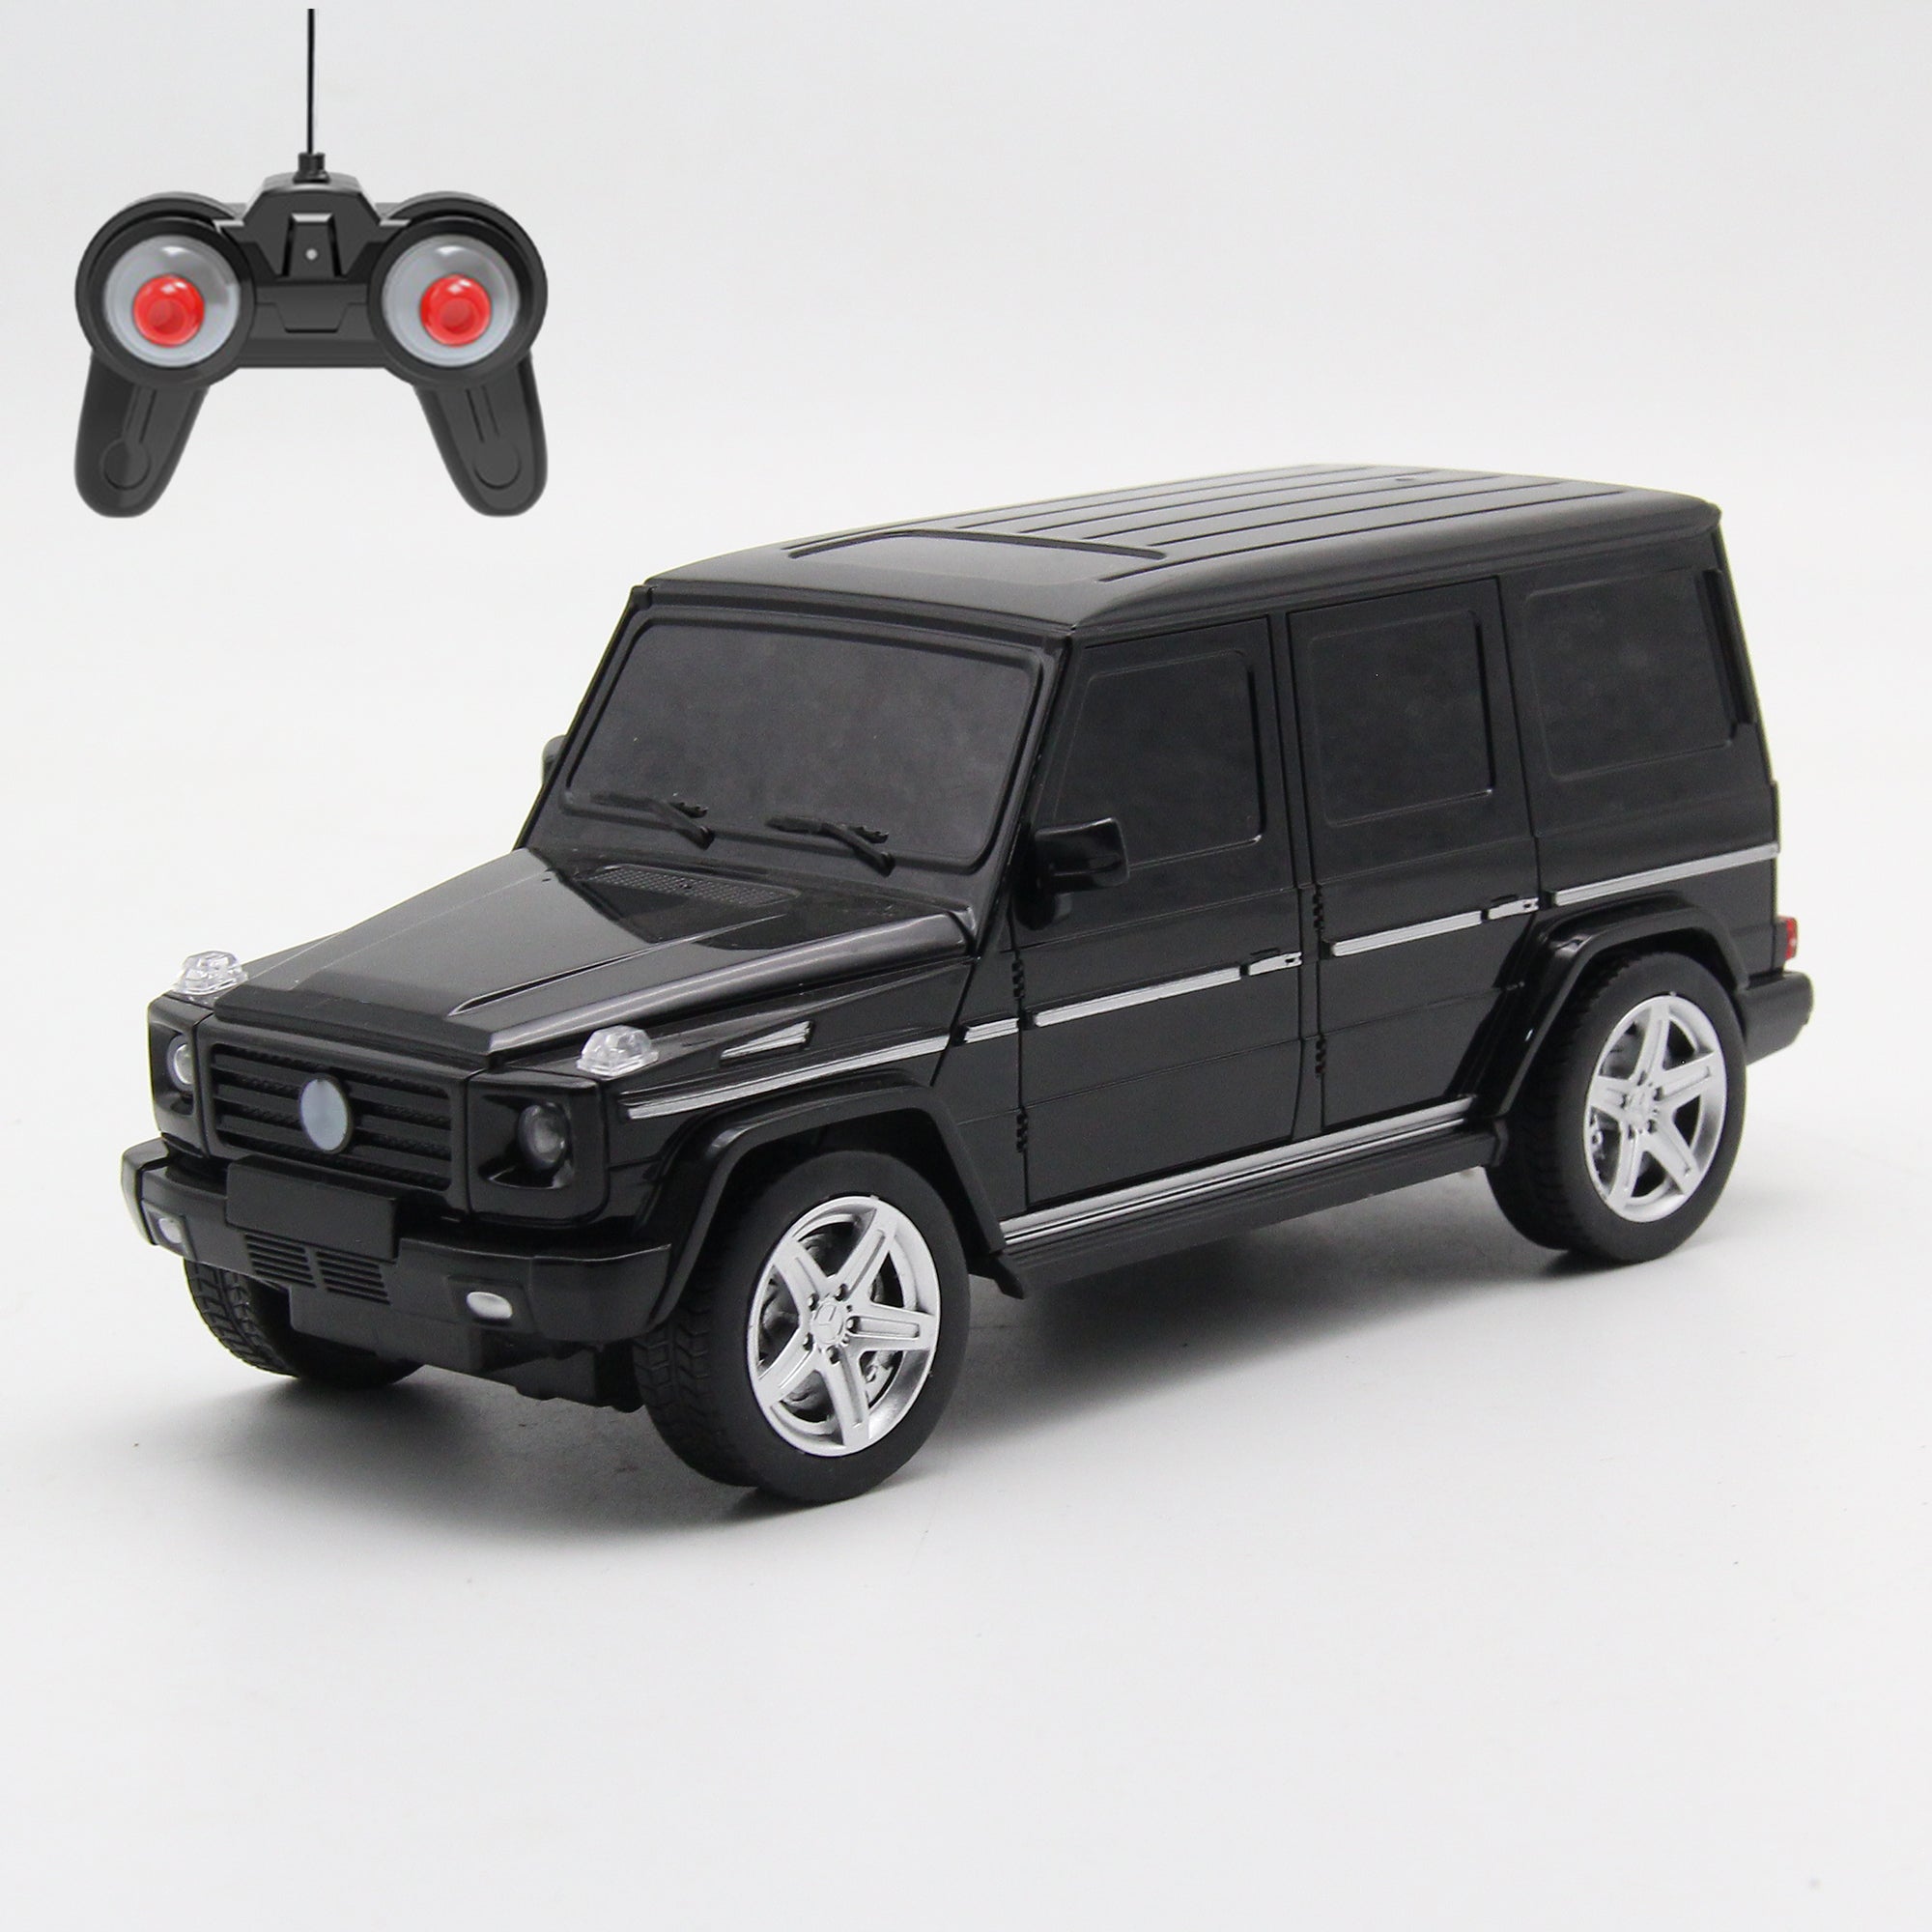 Playzu Remote Control Car Series, SUV R/C 1:24 – Black